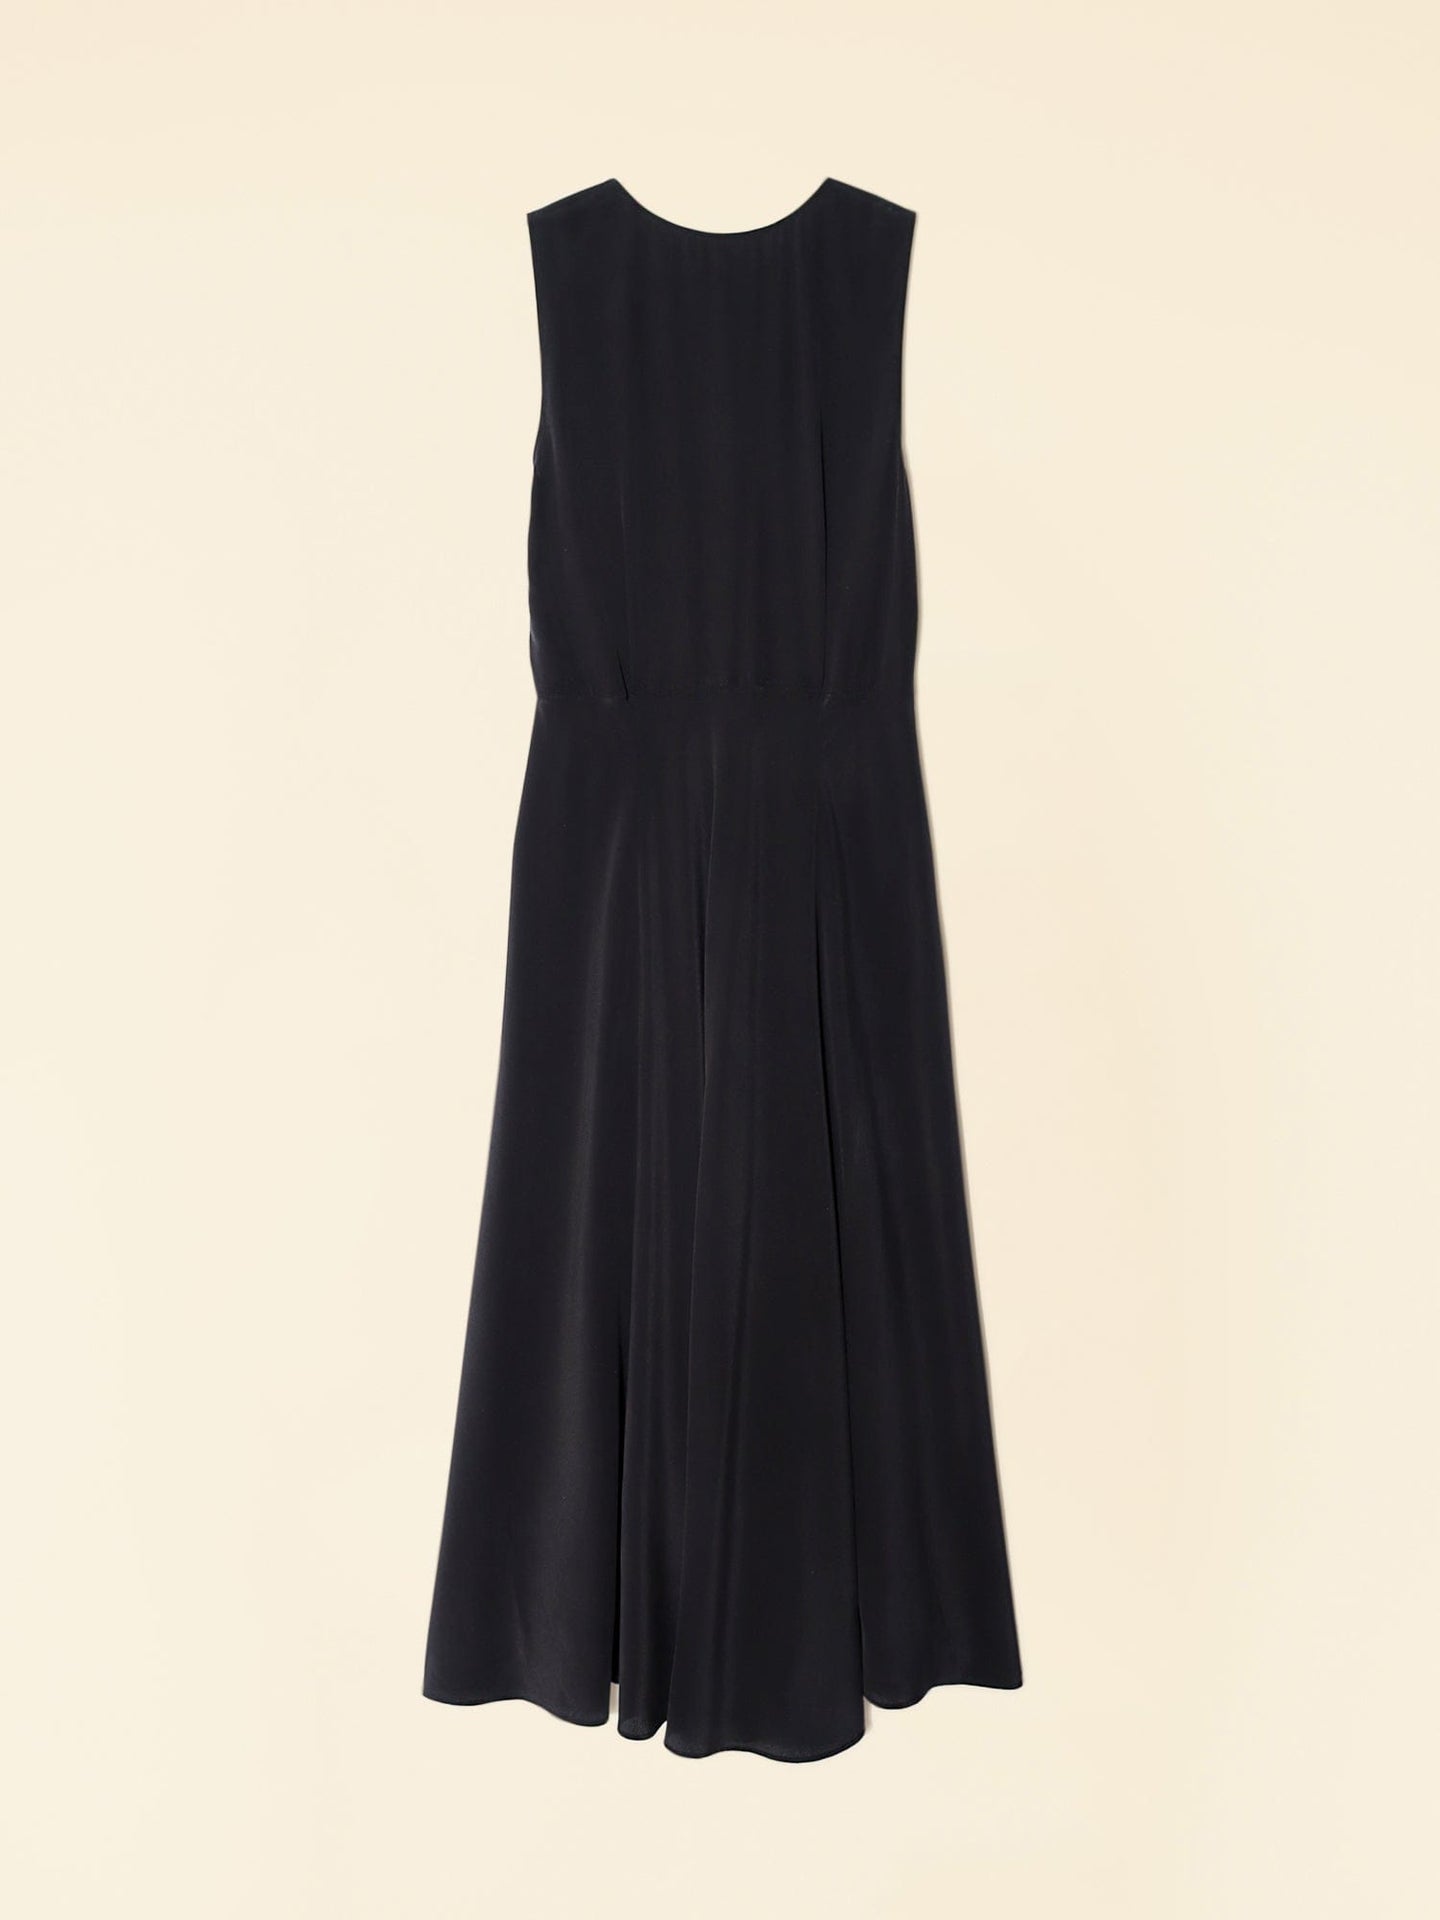 Xirena Dress Black Satine Dress